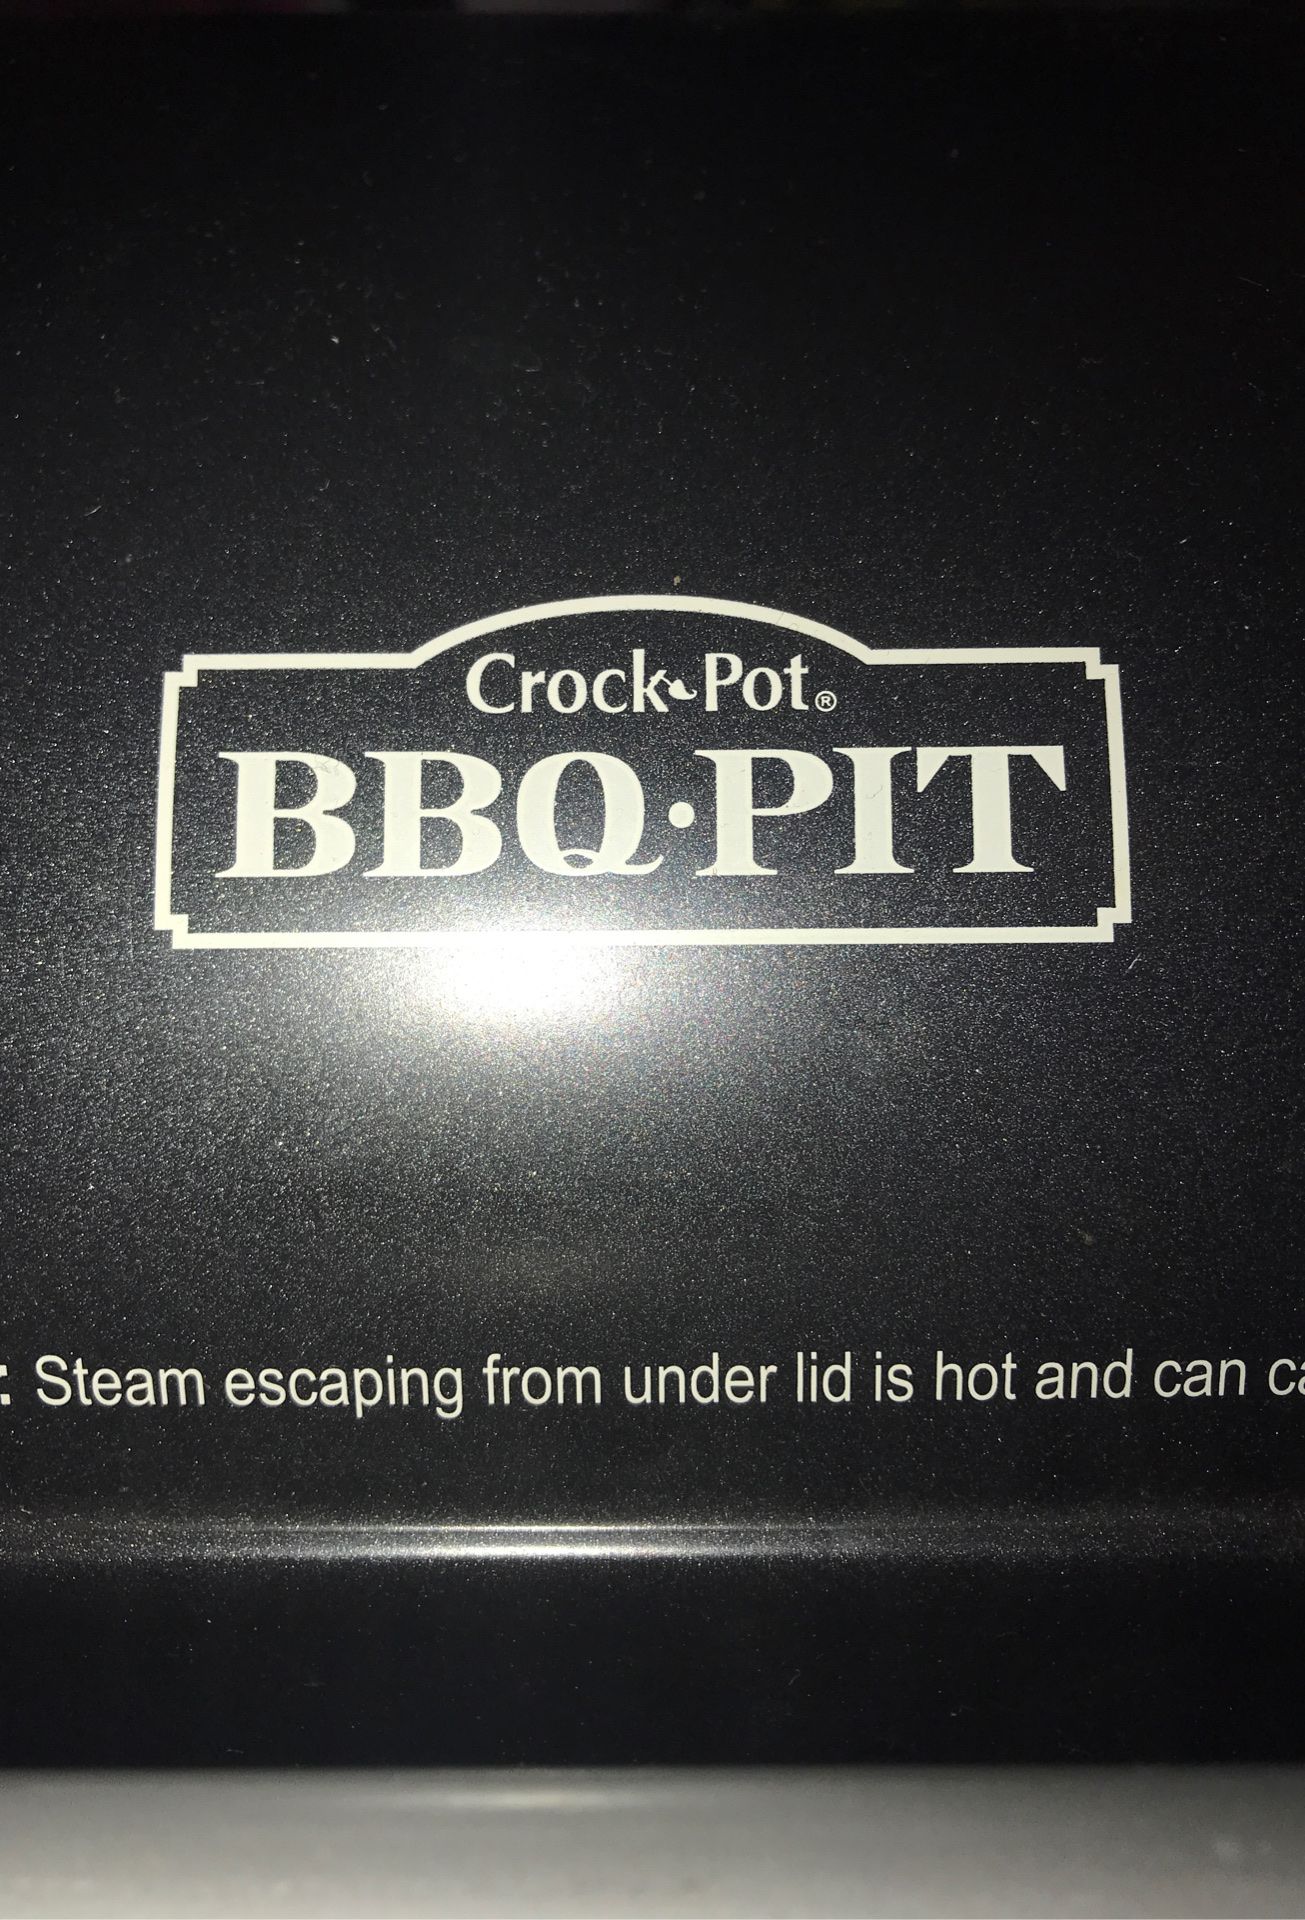 Crock pot BBQ pit